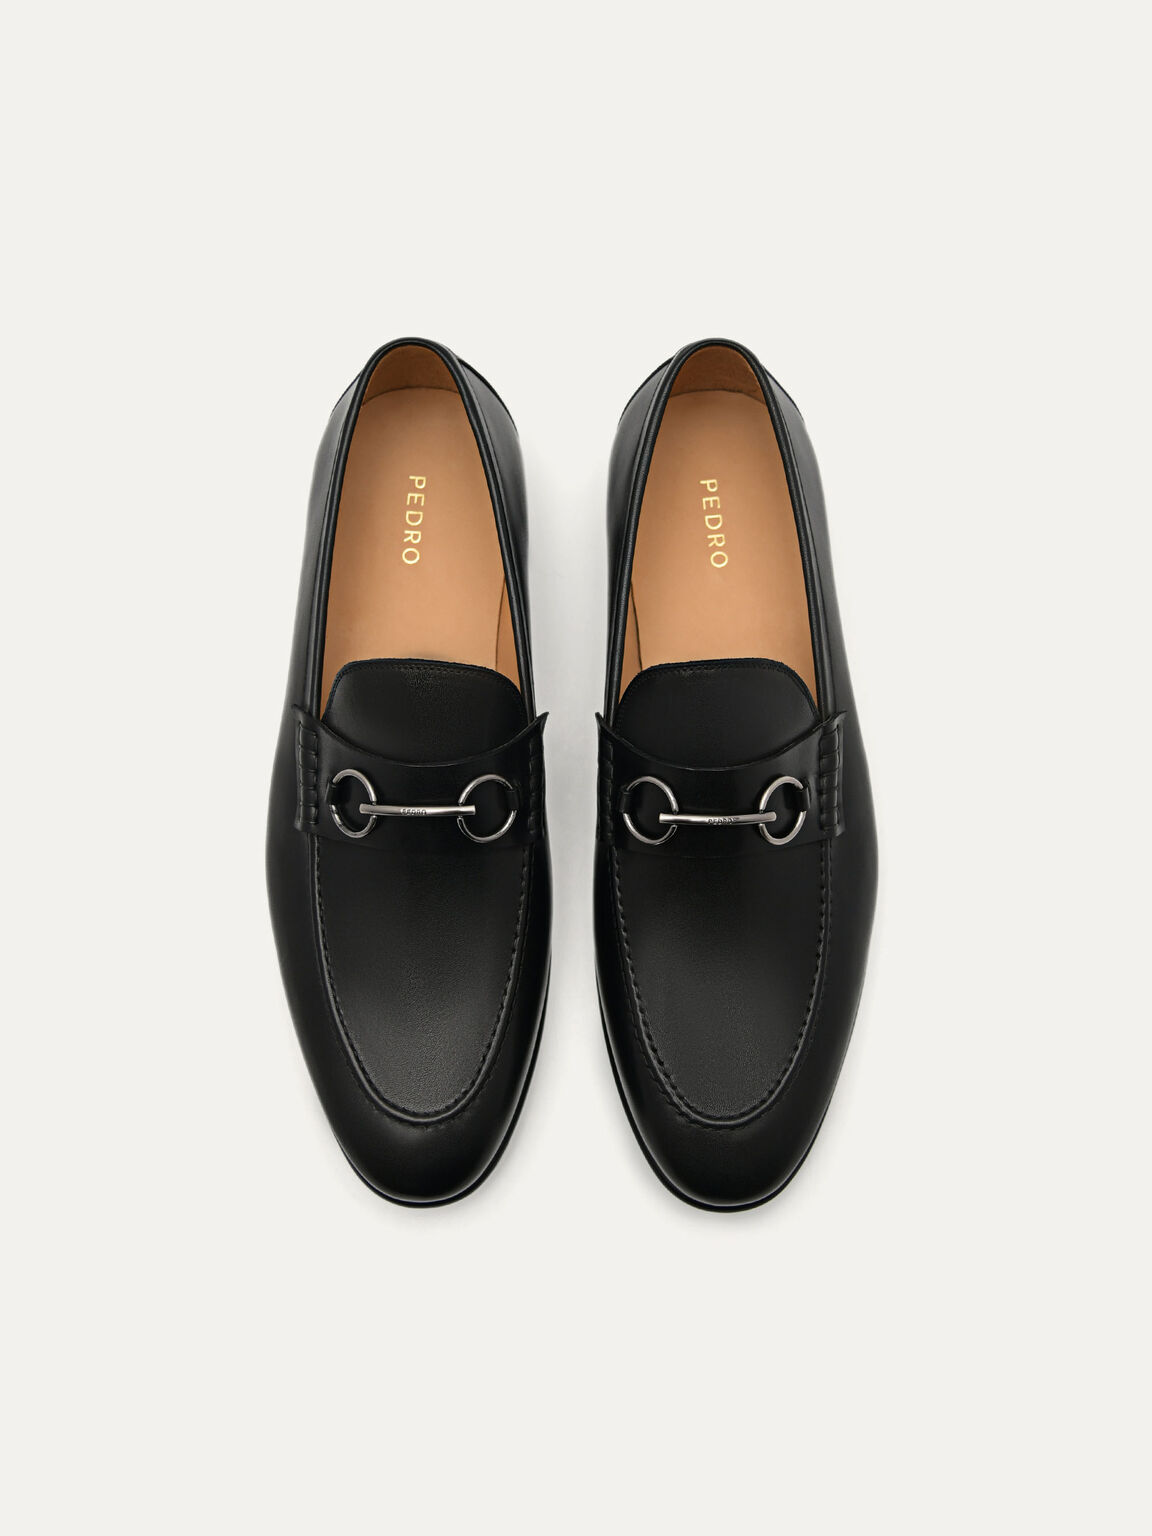 Gable皮革樂福鞋, 黑色